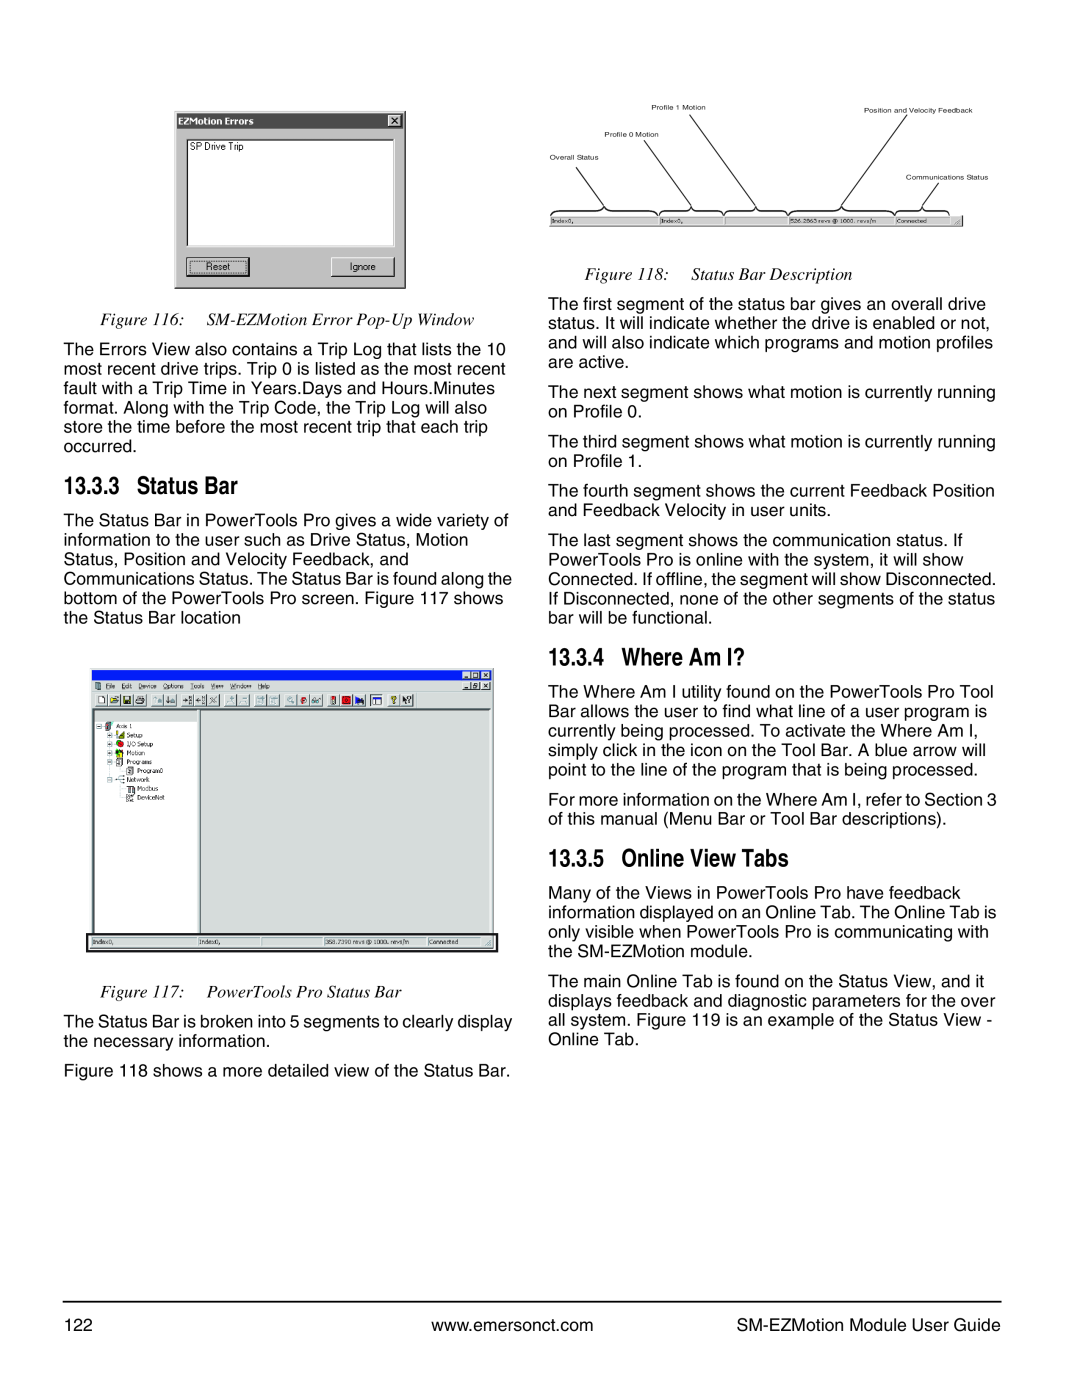 Emerson P/N 400361-00 manual Where Am I?, Online View Tabs, SM-EZMotion Error Pop-Up Window, Status Bar Description 